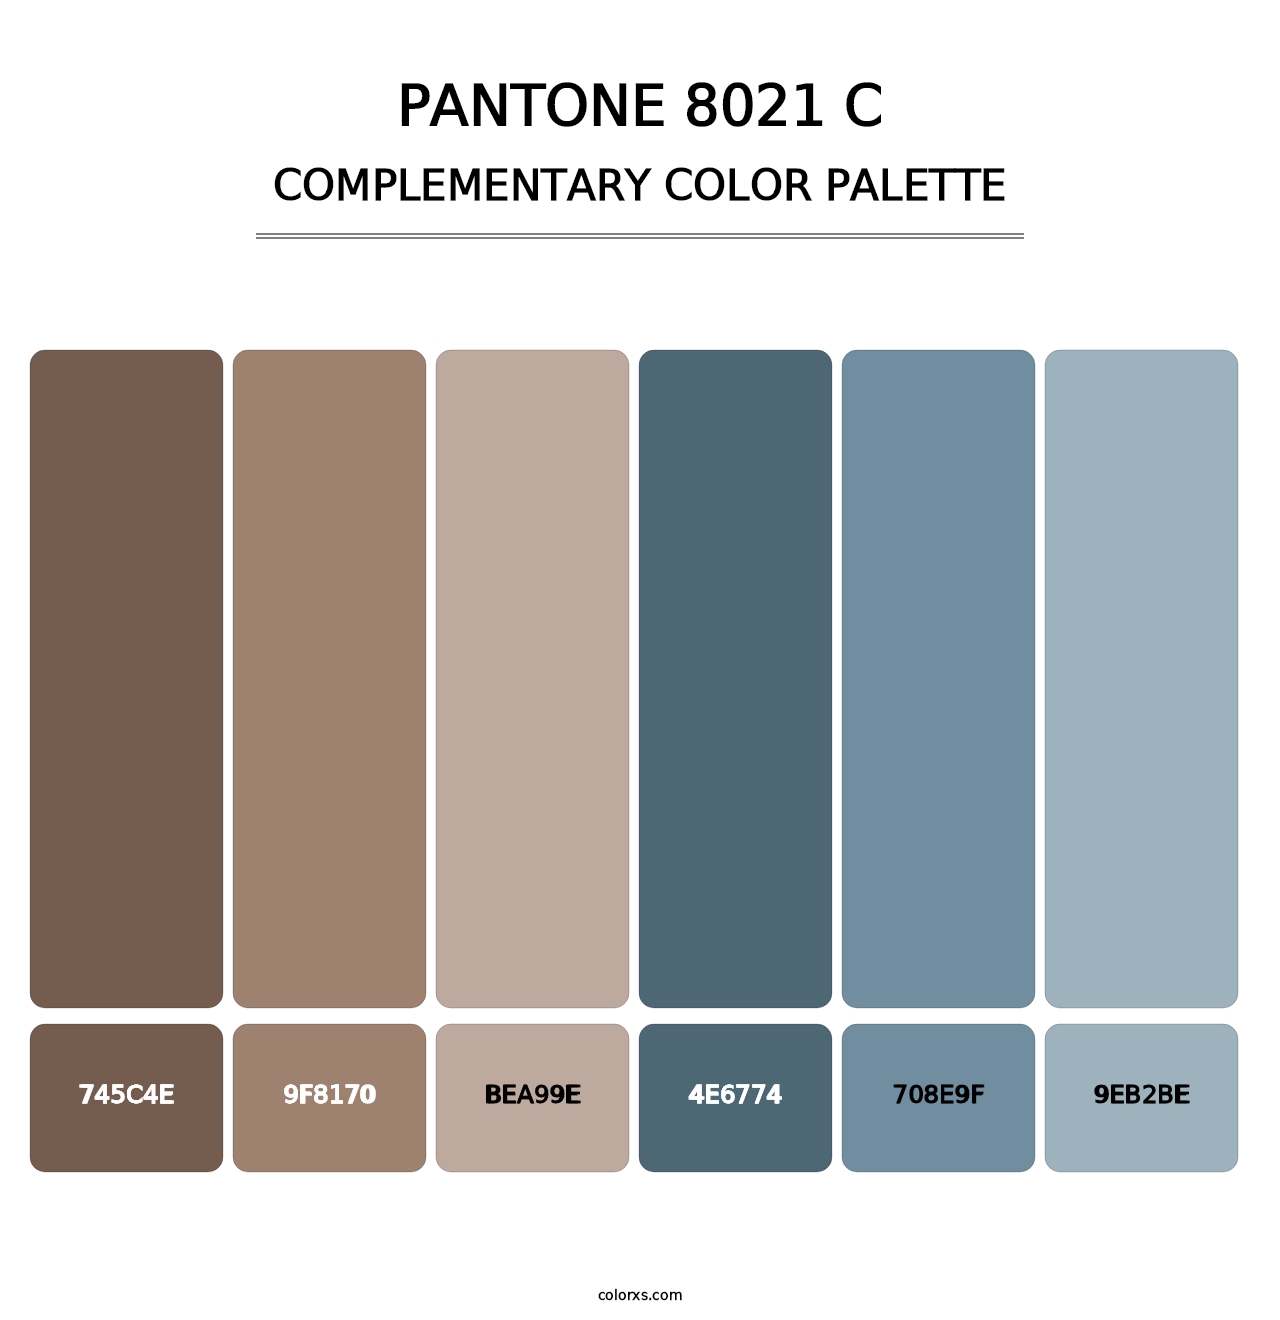 PANTONE 8021 C - Complementary Color Palette